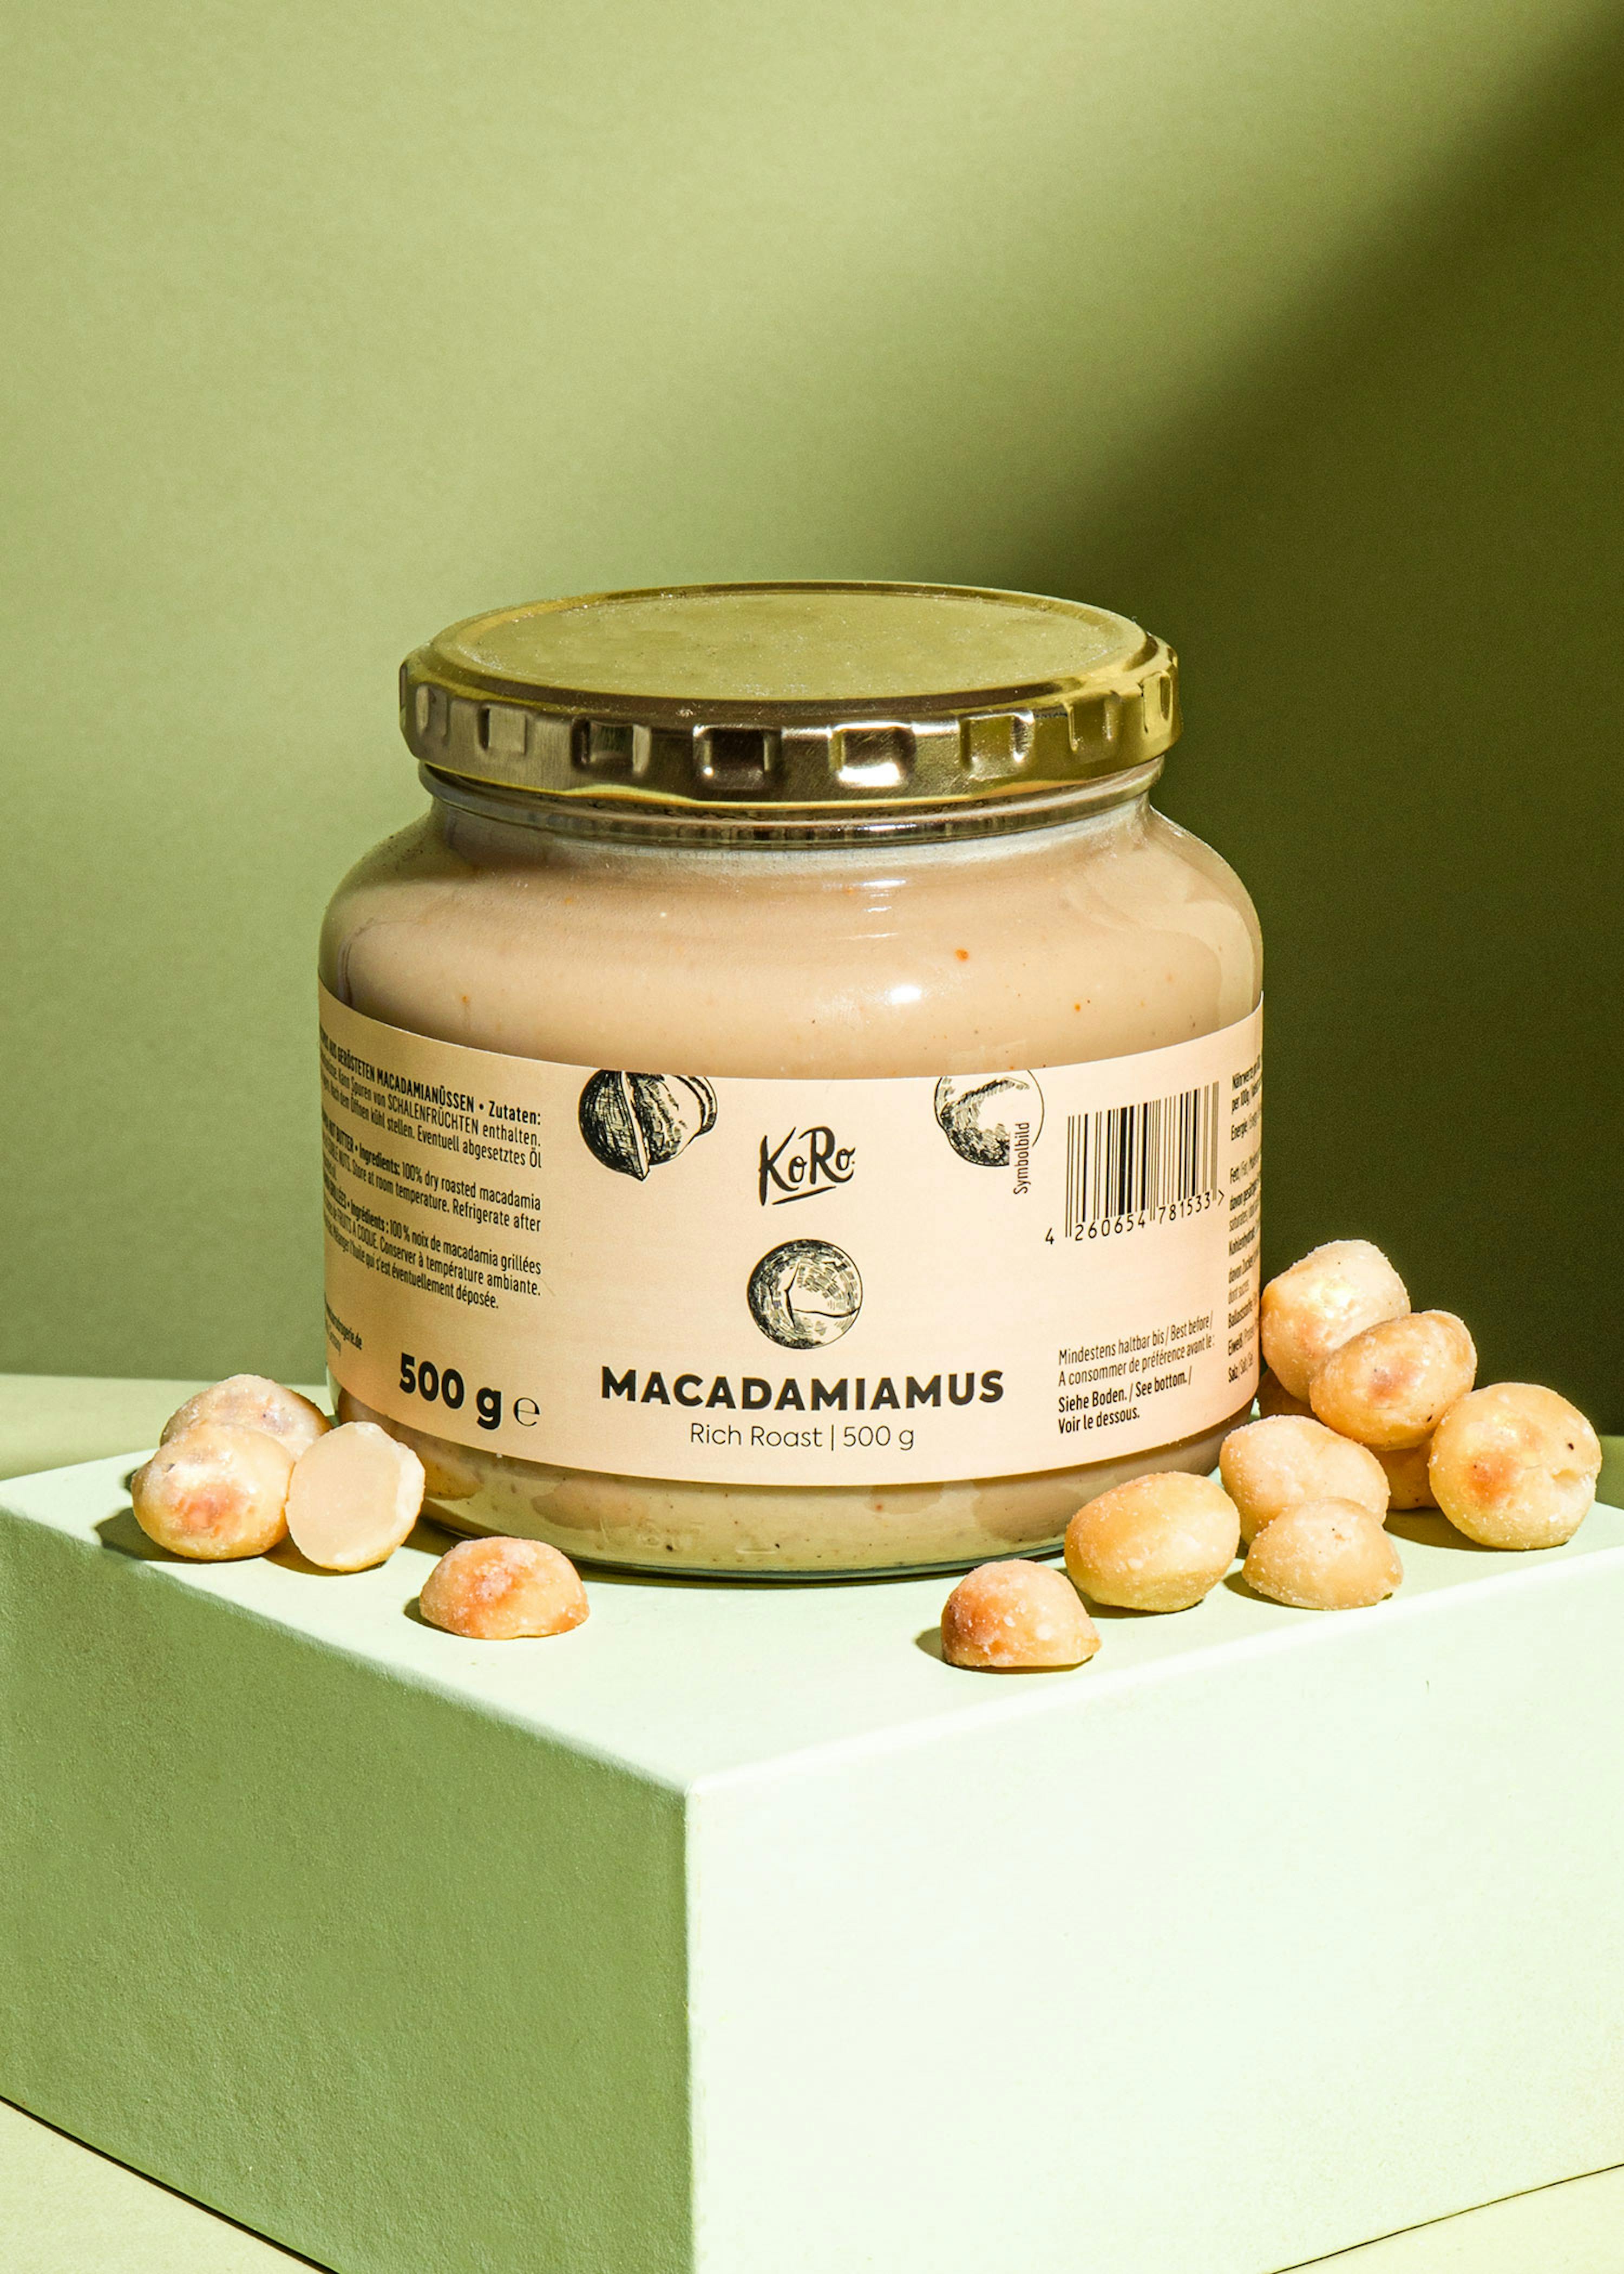 Comment tailler le macadamia & récolter les noix de macadamia ?